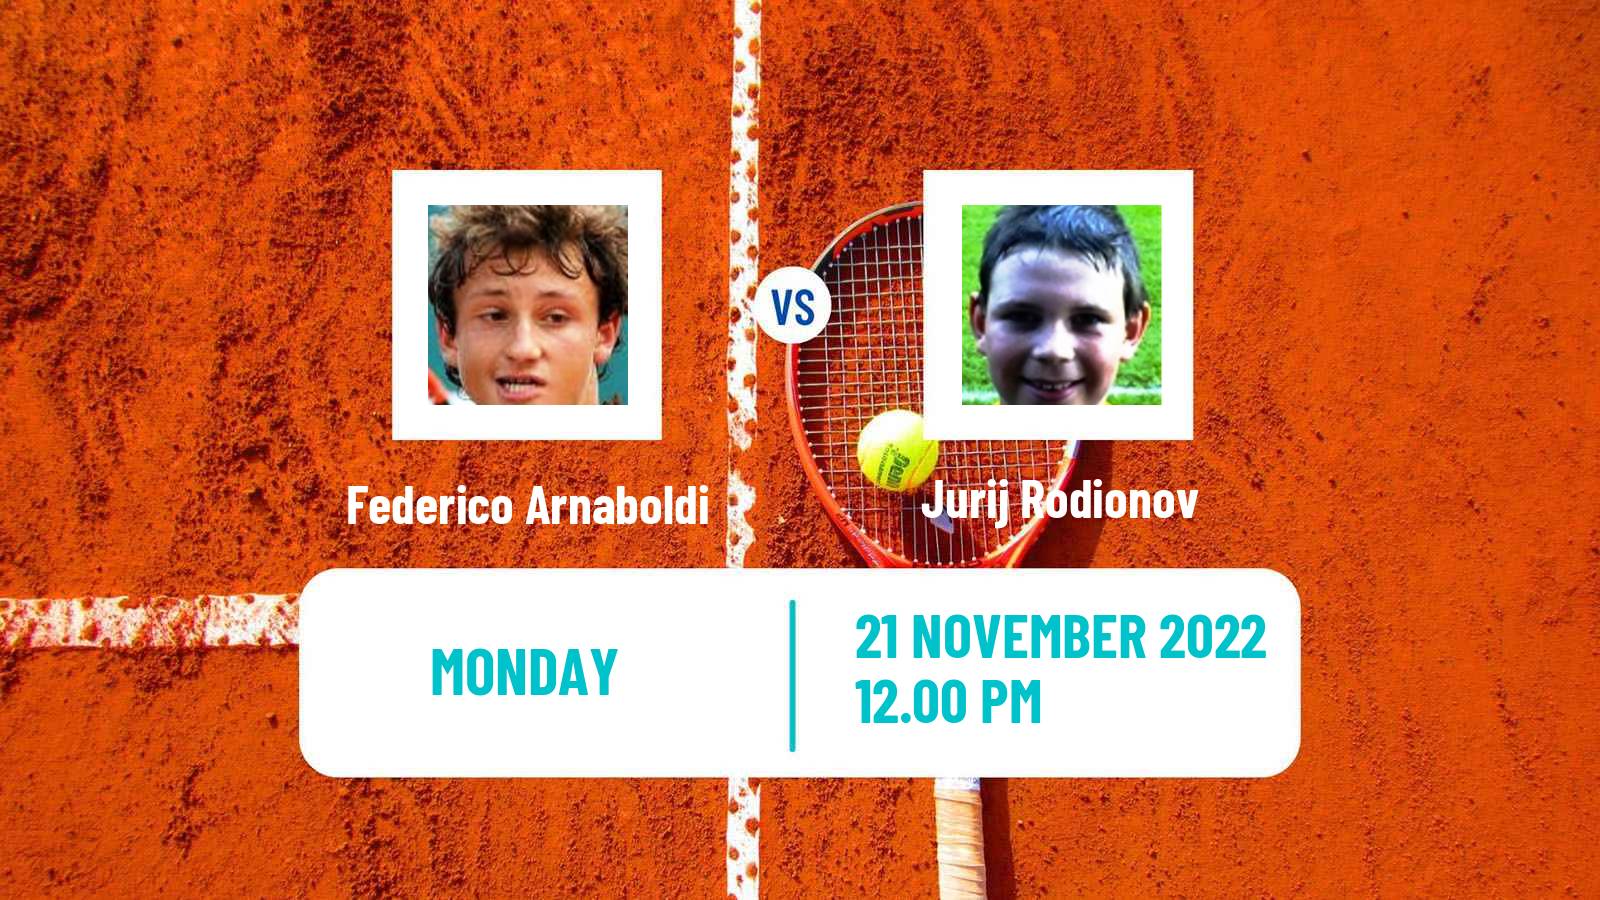 Tennis ATP Challenger Federico Arnaboldi - Jurij Rodionov